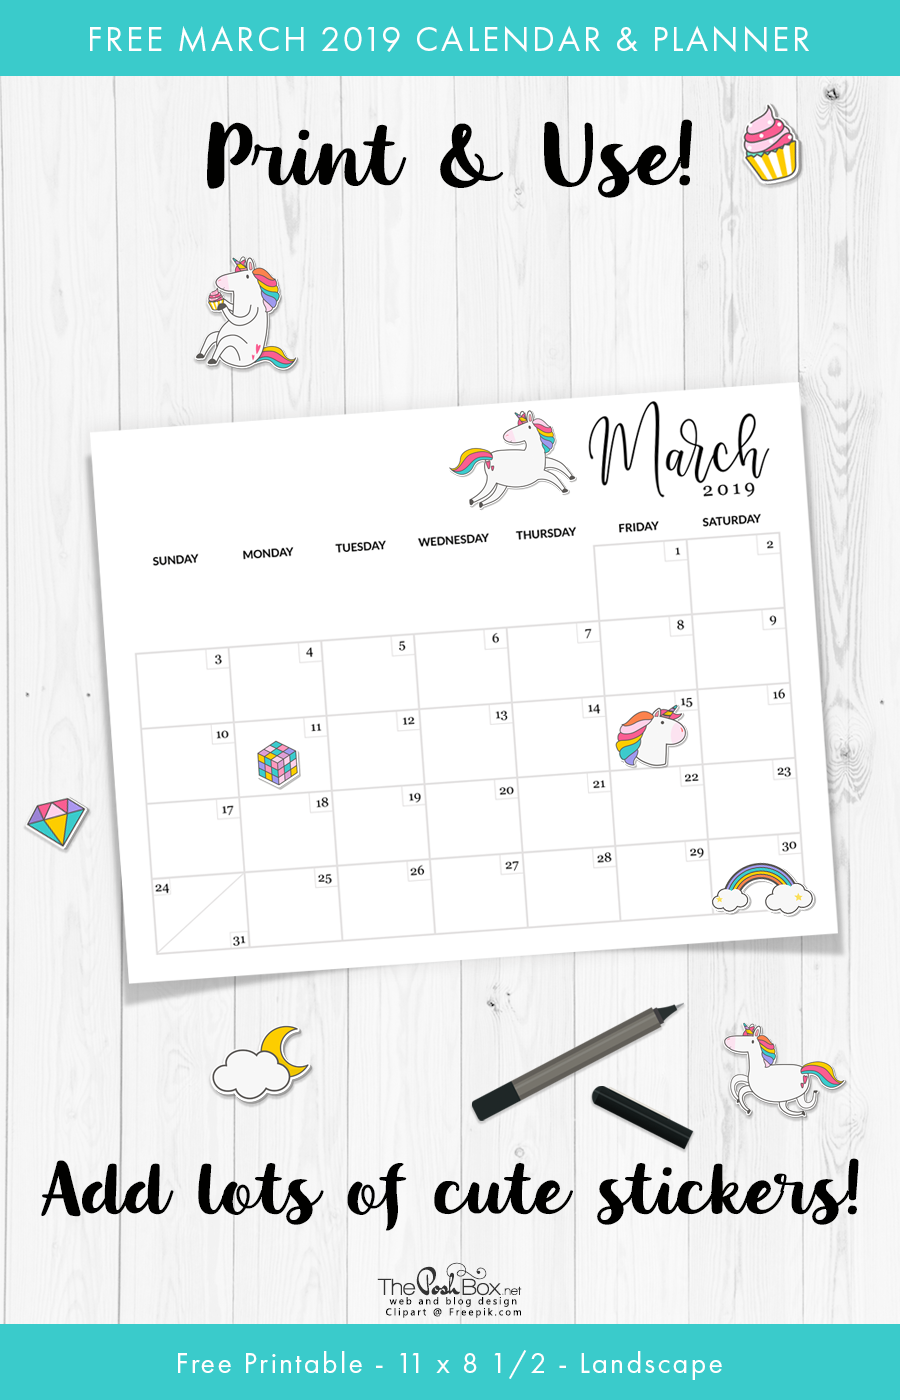 Free March 2019 Calendar & Planner